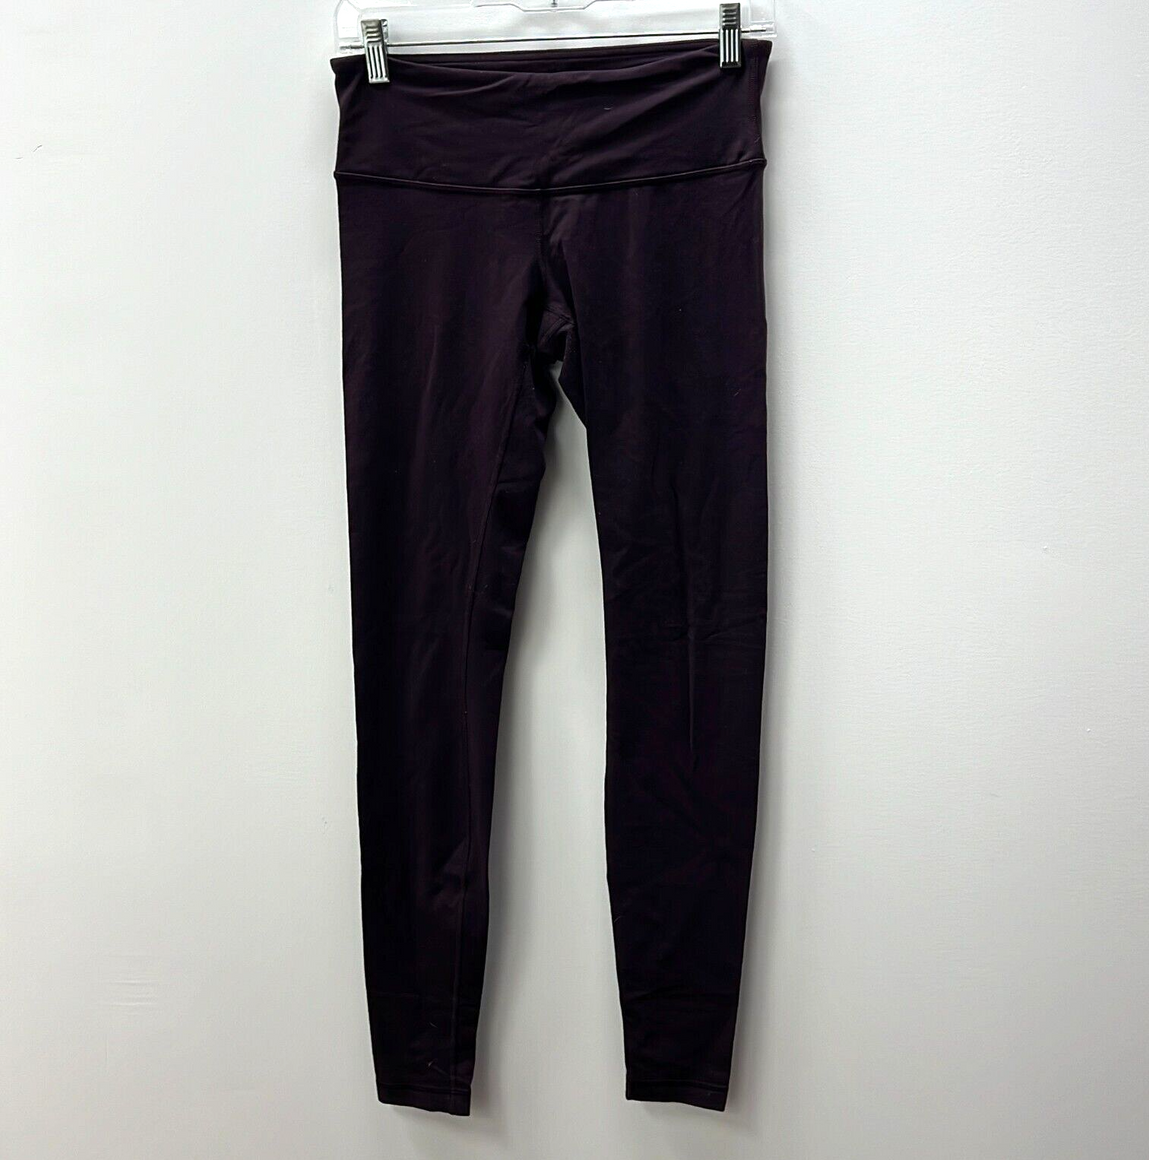 Purple Womens Lululemon Leggings 6 New Collection - Lululemon